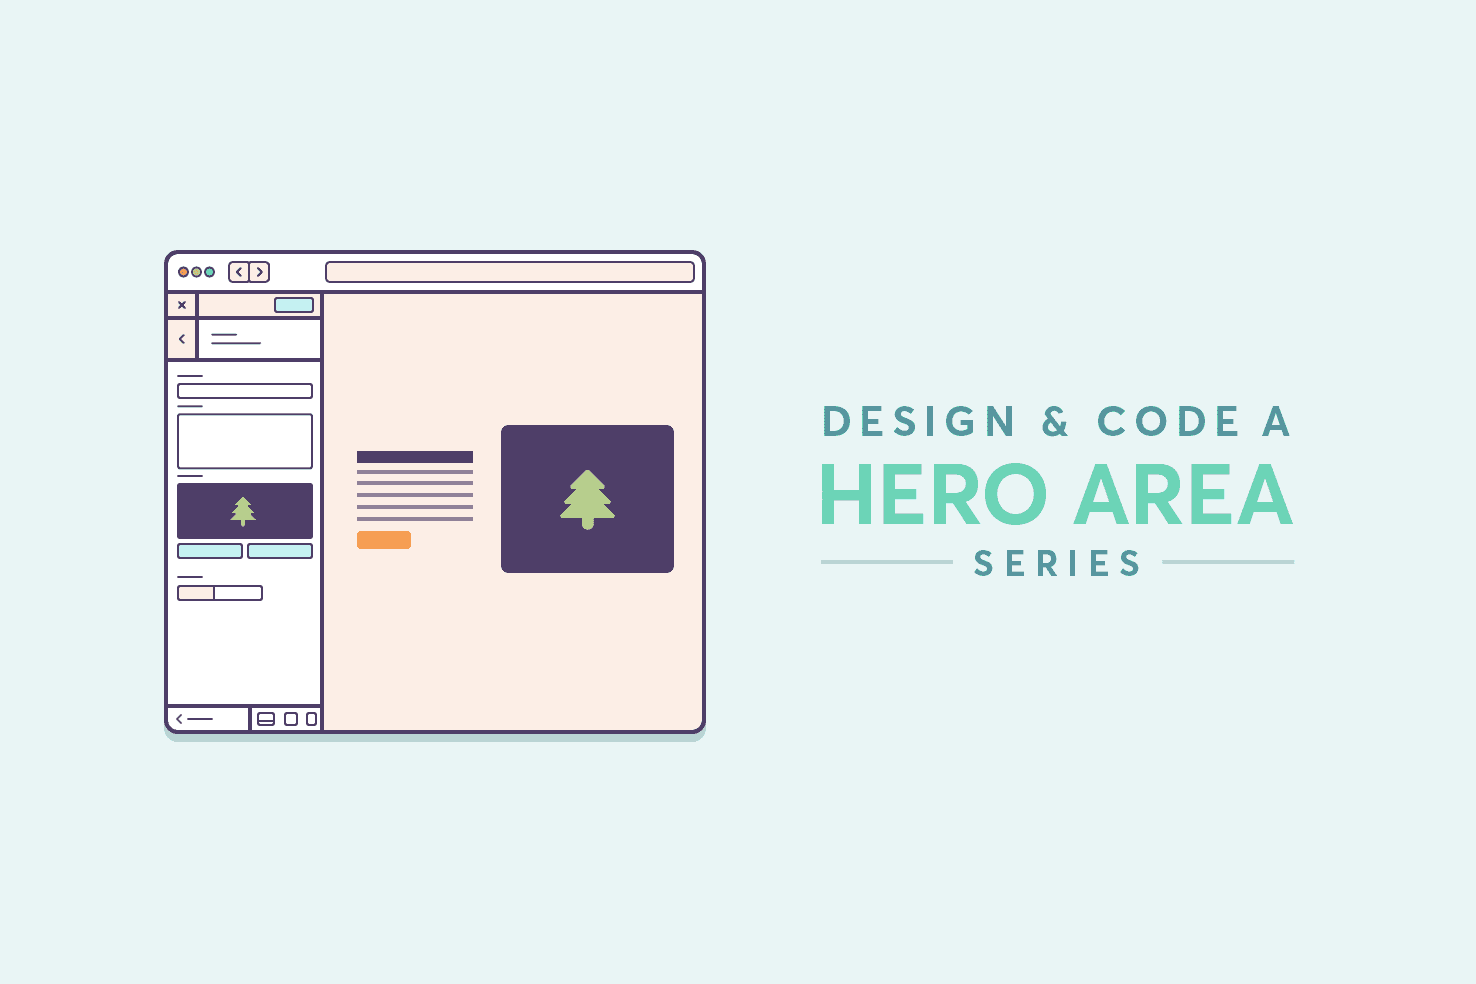 Hero area series: HTML, CSS & responsive (featured image)